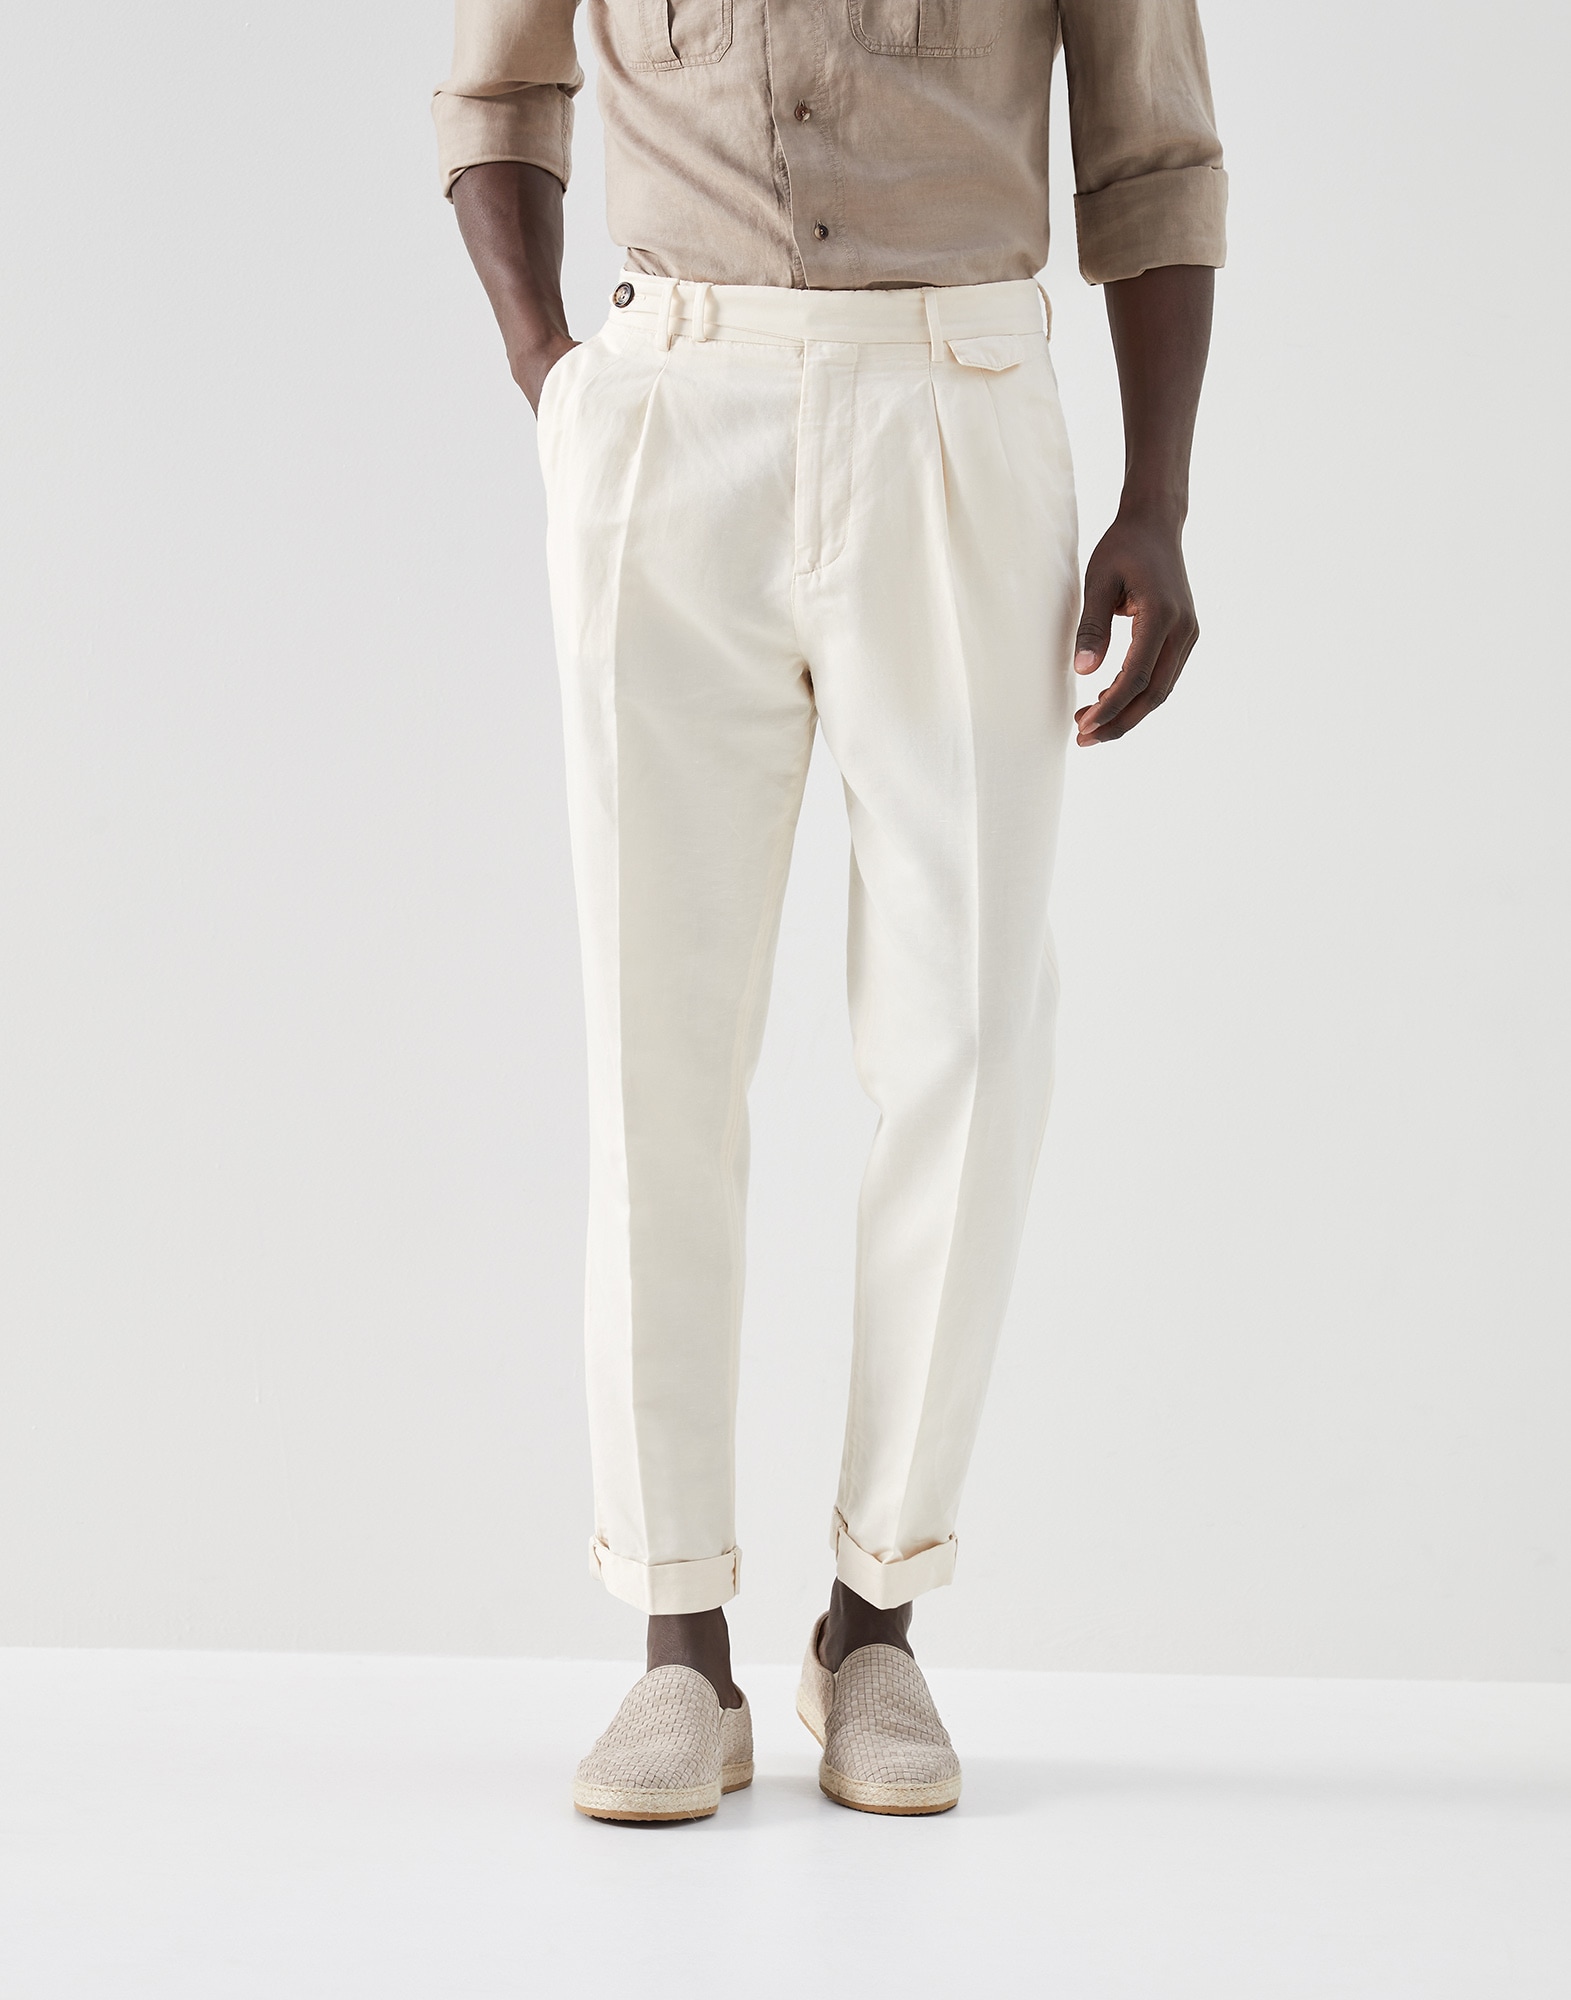 Leisure fit trousers (232MP91DE1920) for Man | Brunello Cucinelli